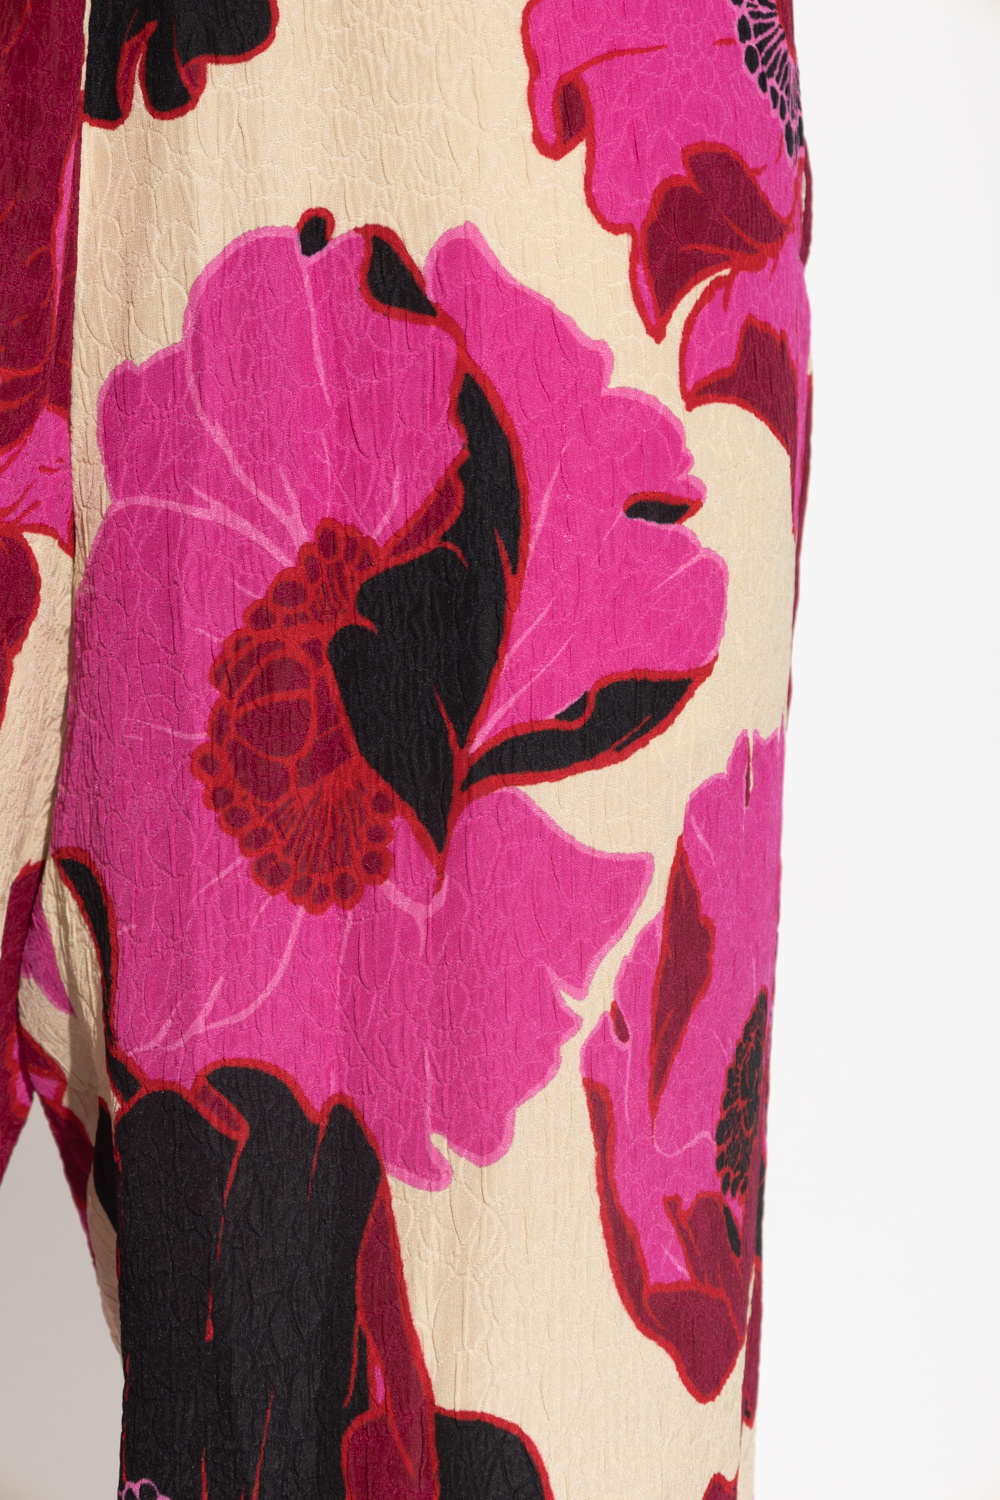 South Beach Transparente Shorts und Oberteil im Stufenlook Trousers with floral motif